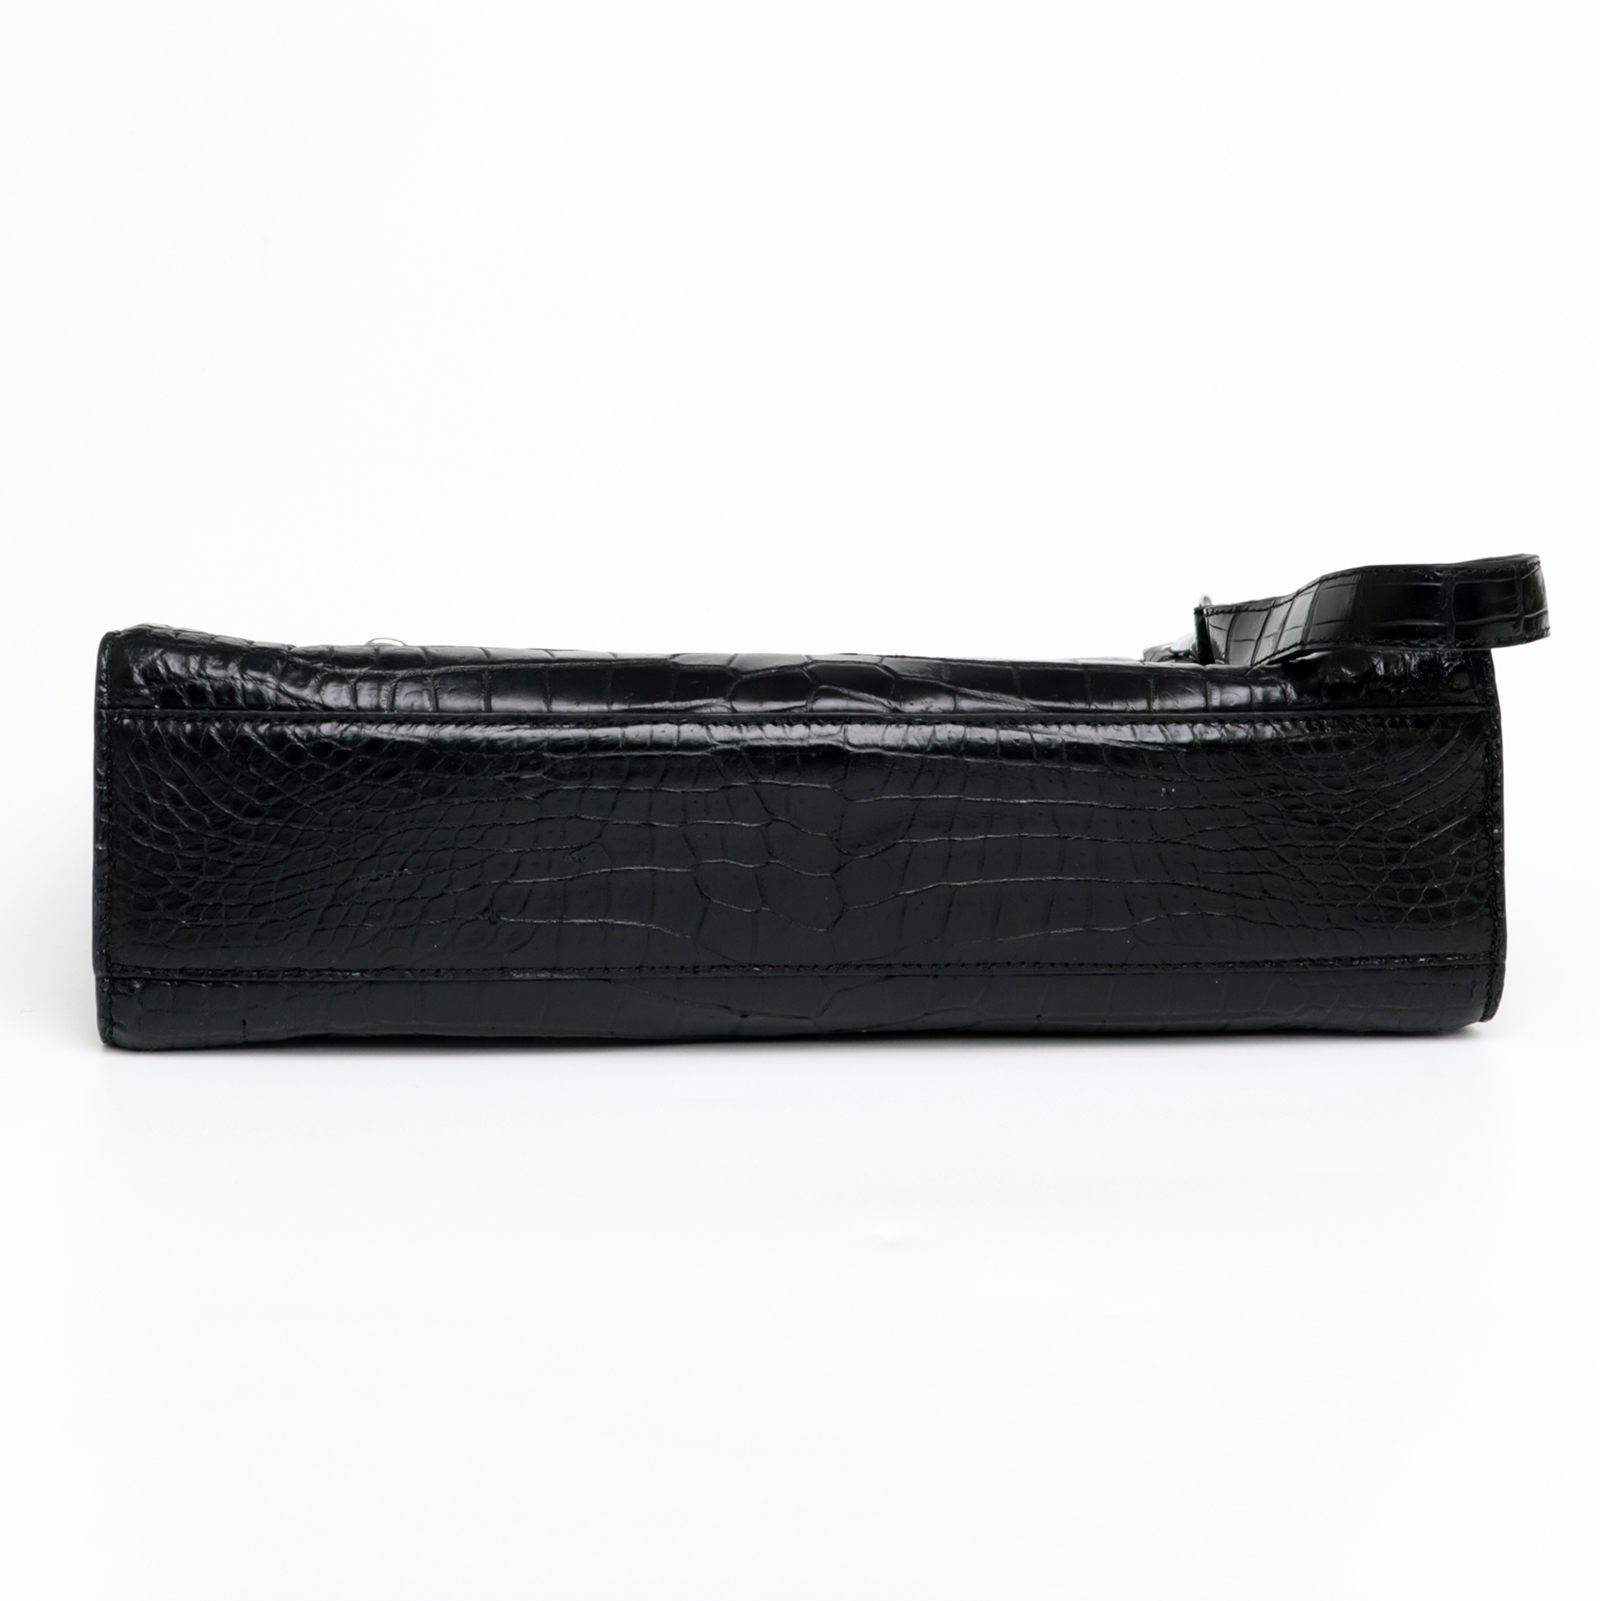 Crocodile Leather Design Zipper Clutch Bag: Effortless Elegance with Strap